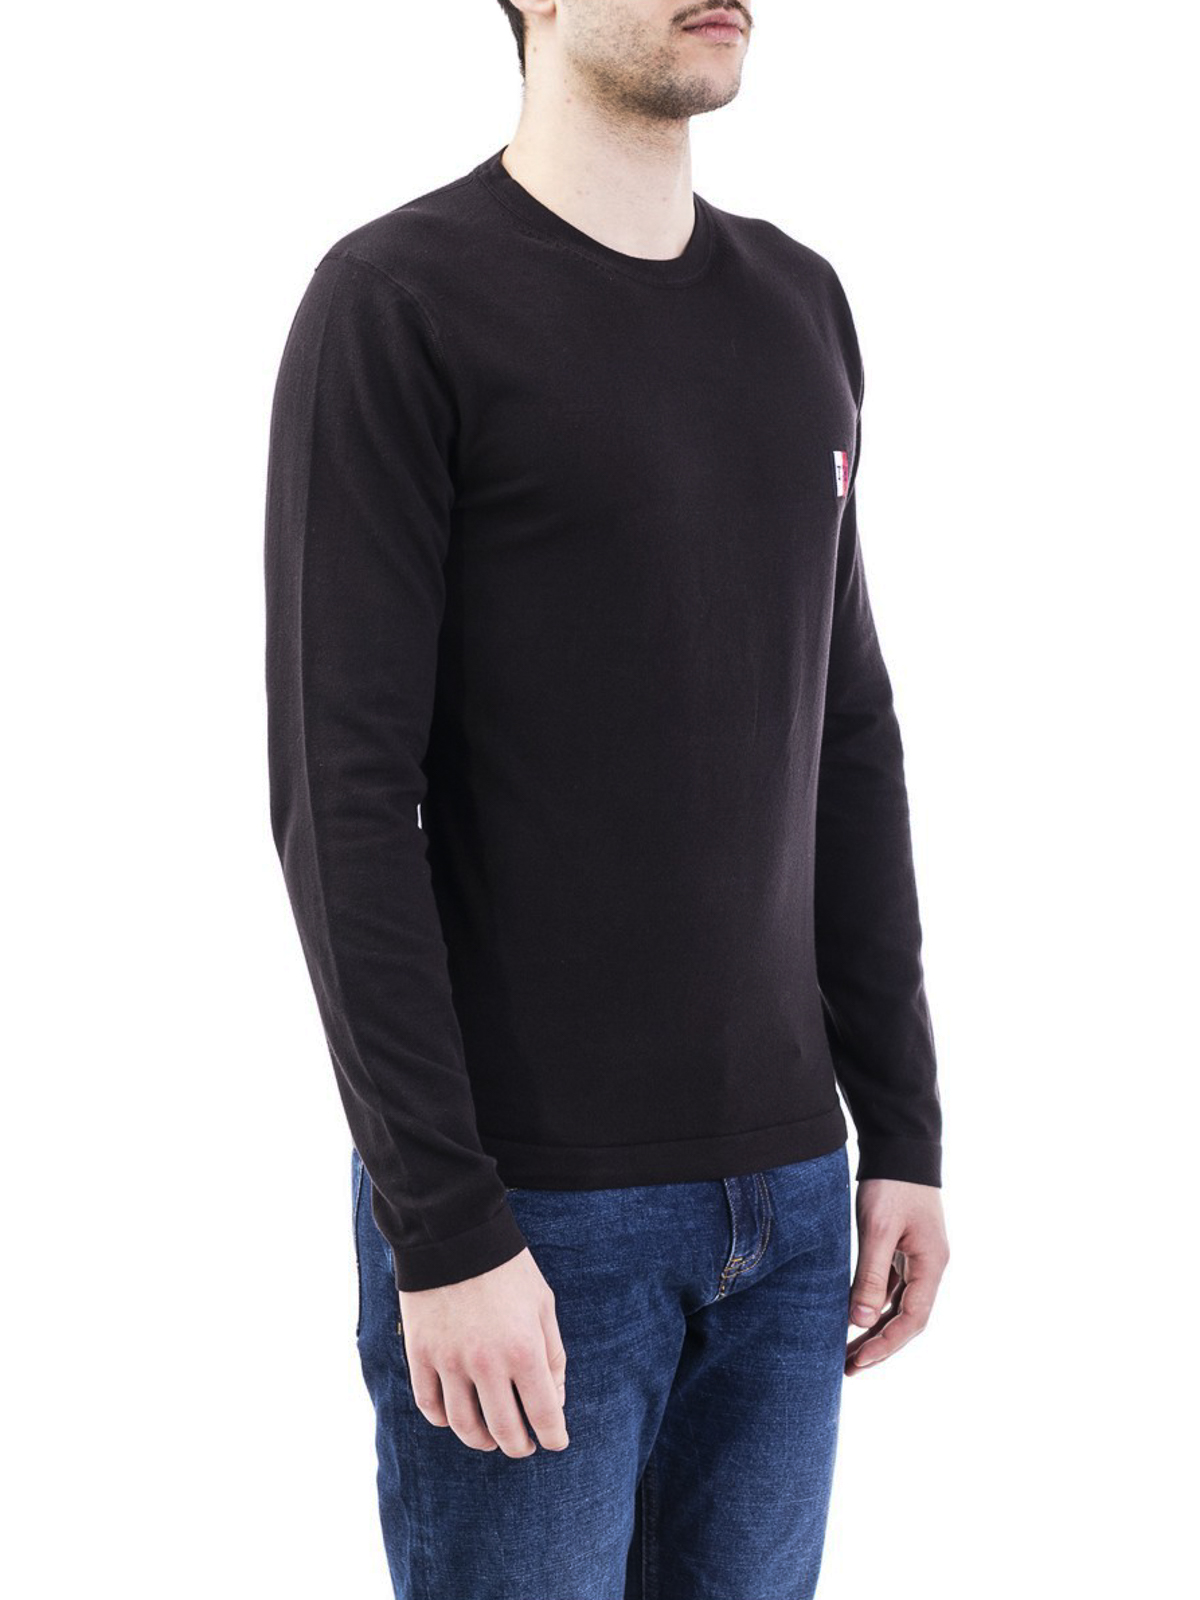 necks Tommy Hilfiger - blend black sweater -